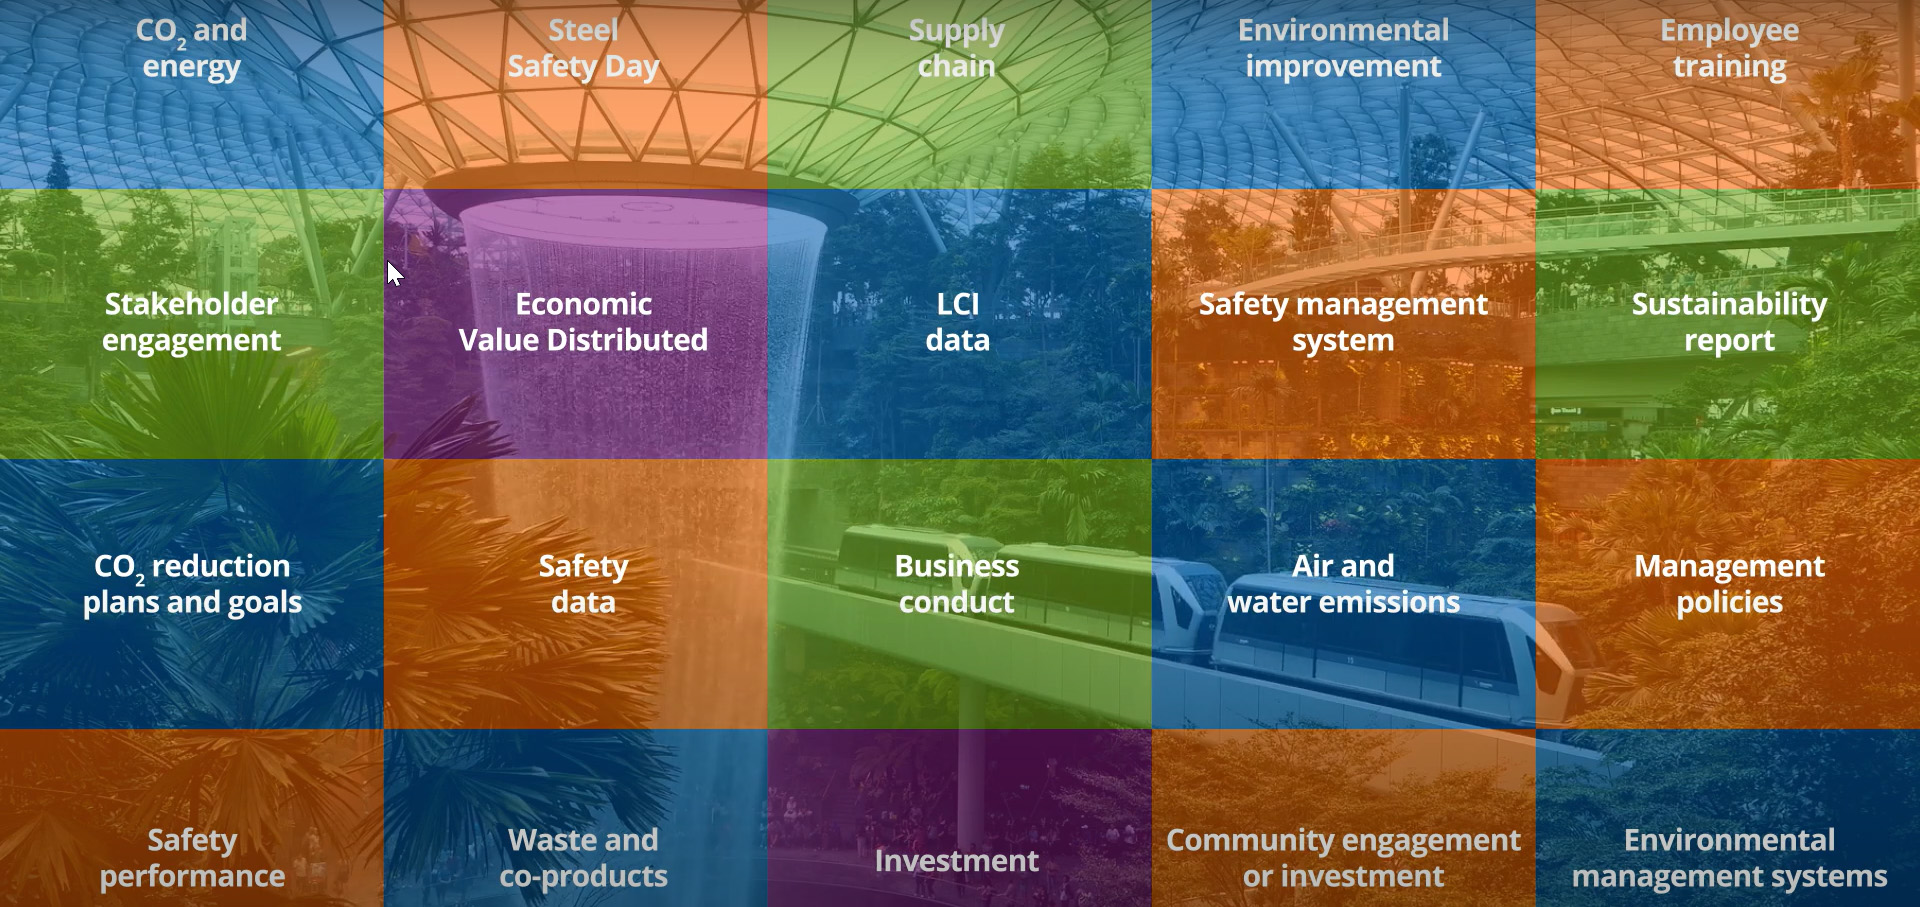 worldsteel releases updated Sustainability Charter